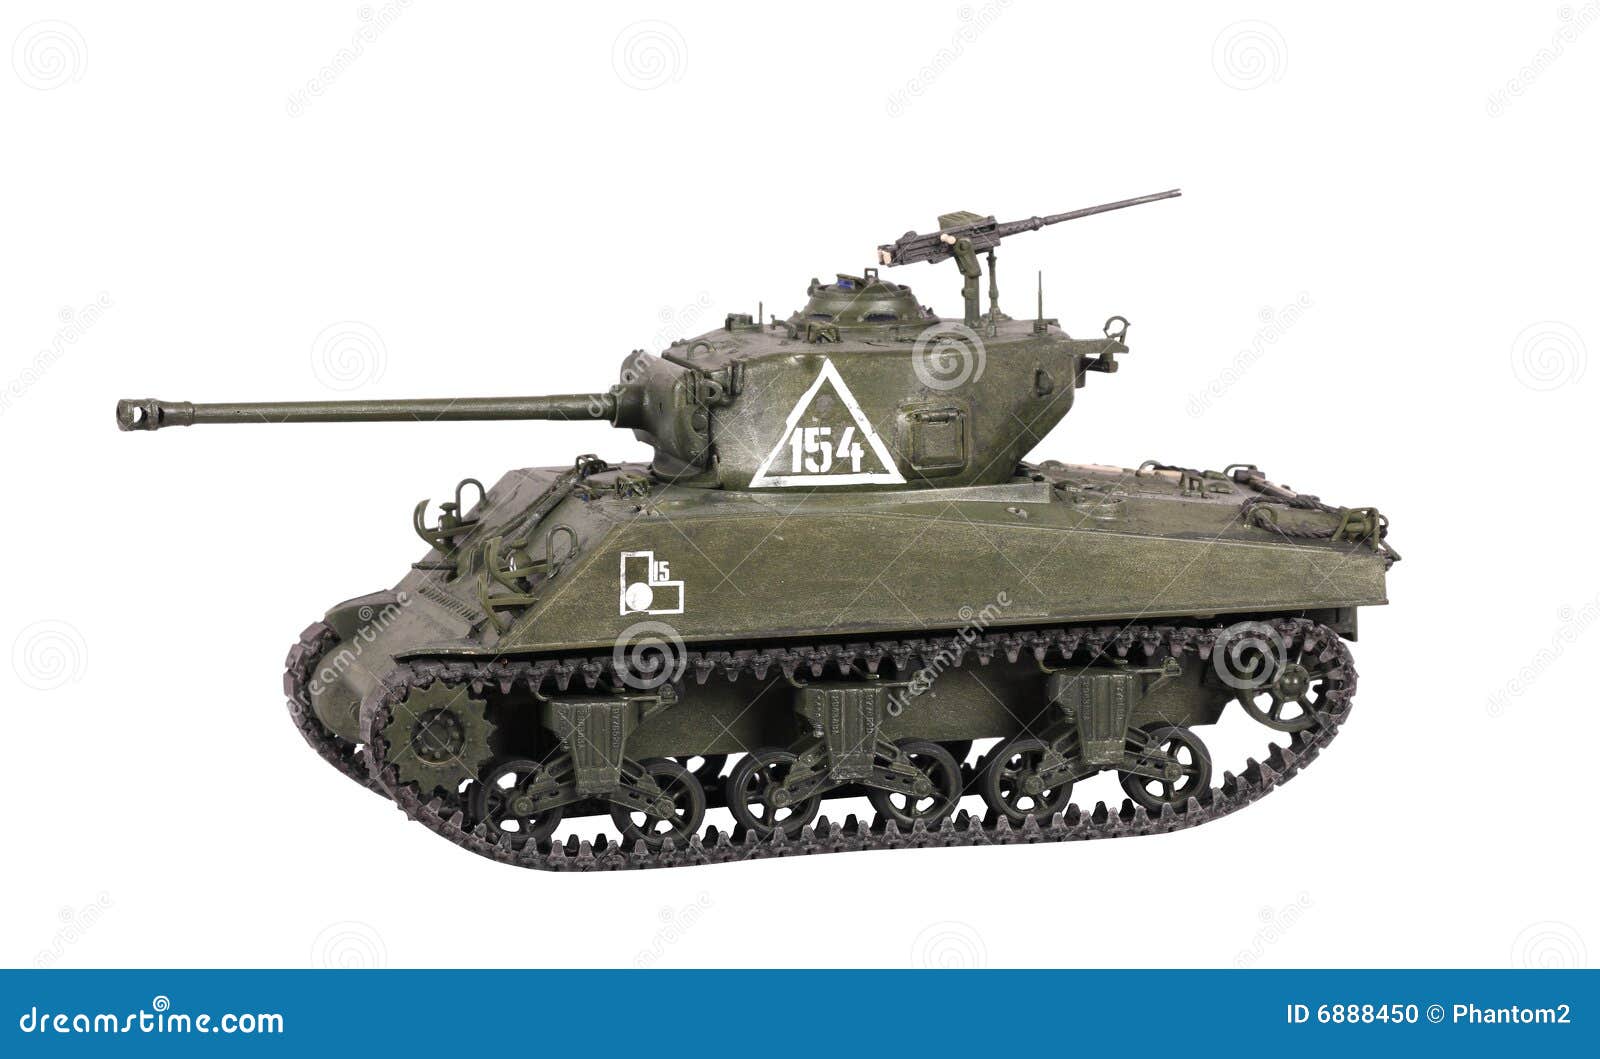 model of sherman tank